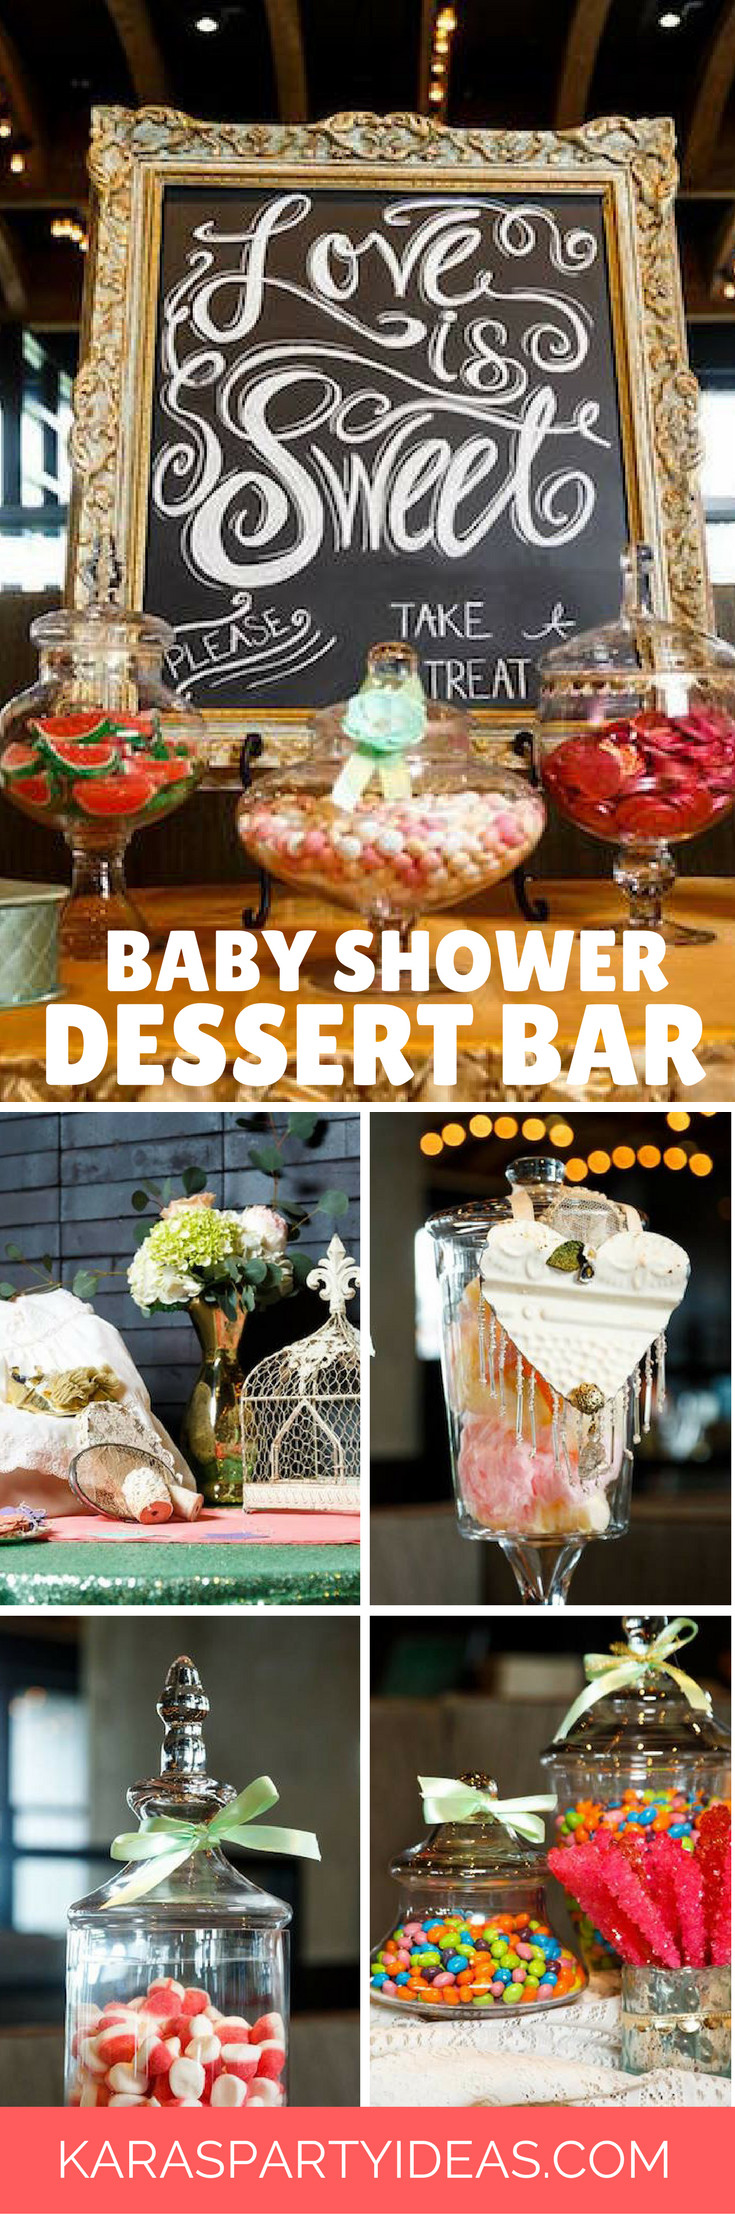 Baby Shower Dessert Bar
 Kara s Party Ideas "Love is Sweet" Baby Shower Dessert Bar